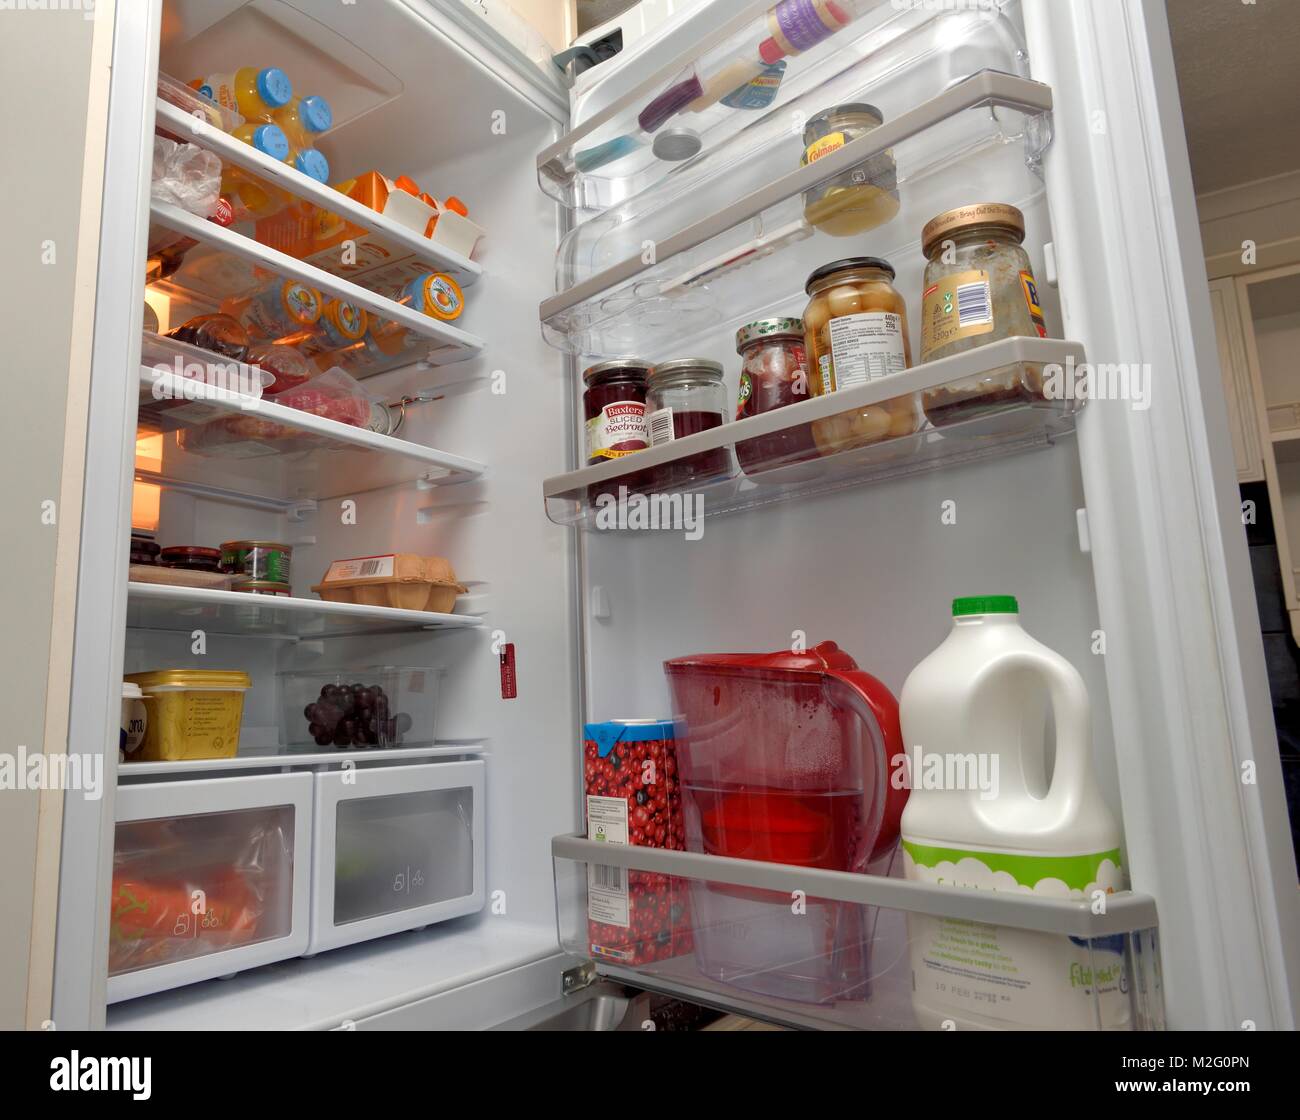 Domestic fridge interior fotografías e imágenes de alta resolución - Alamy